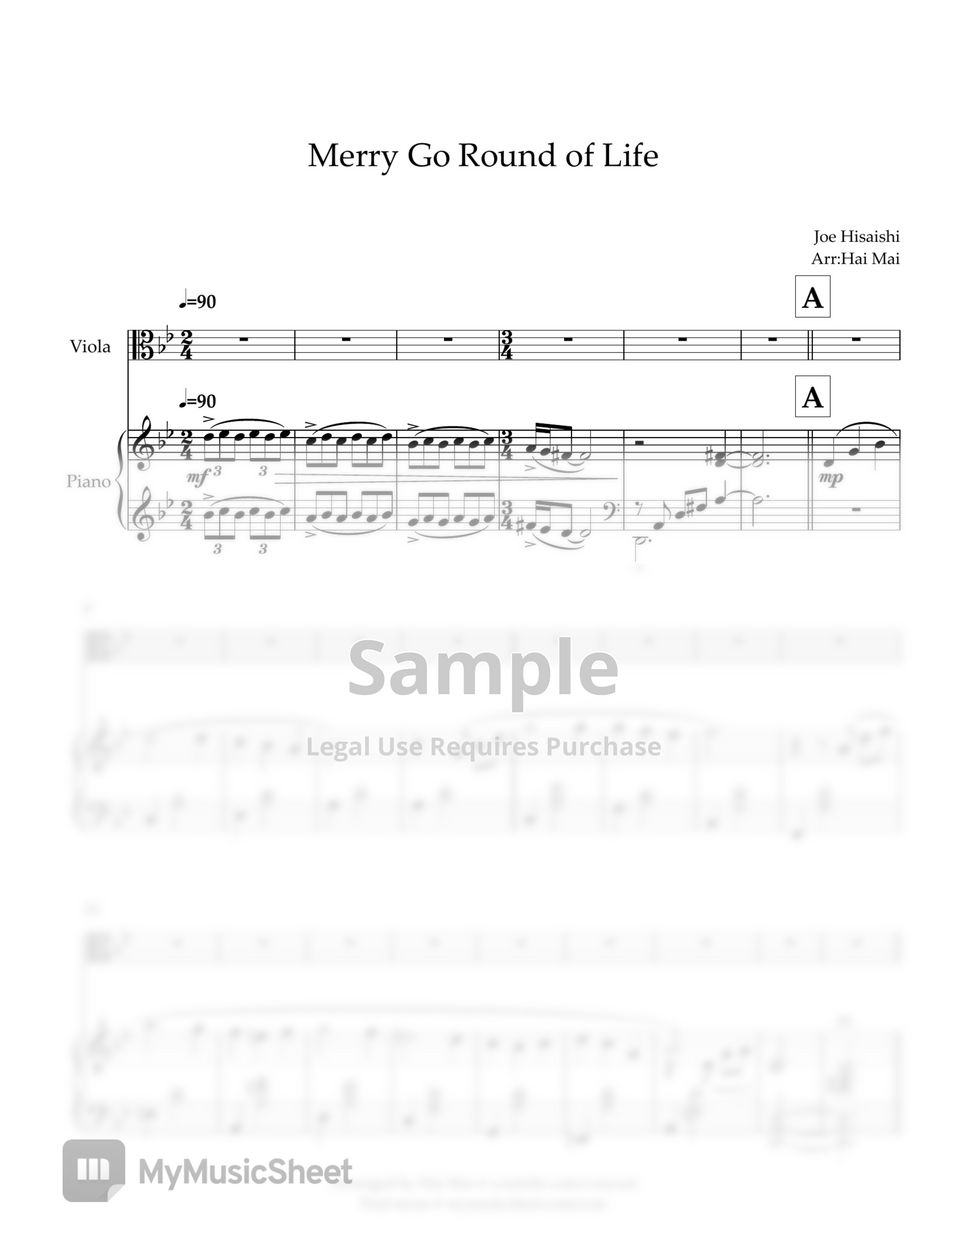 Joe Hisaishi - Merry Go Round of Life for Viola and Piano Accompaniment by Hai Mai